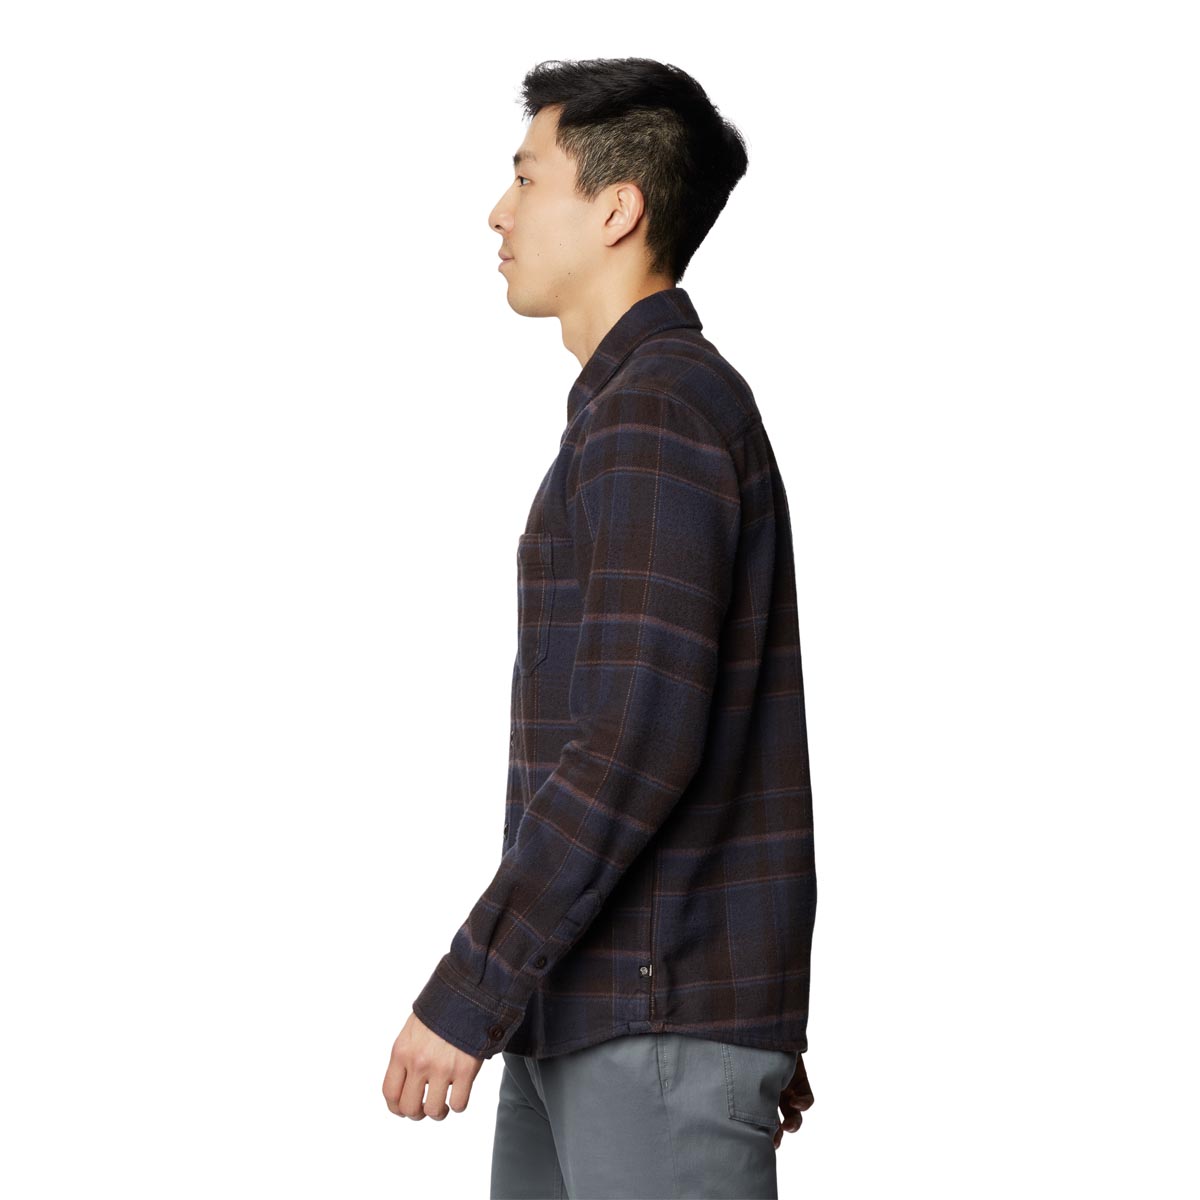 Mountain Hardwear Men's Plusher Long Sleeve Shirt